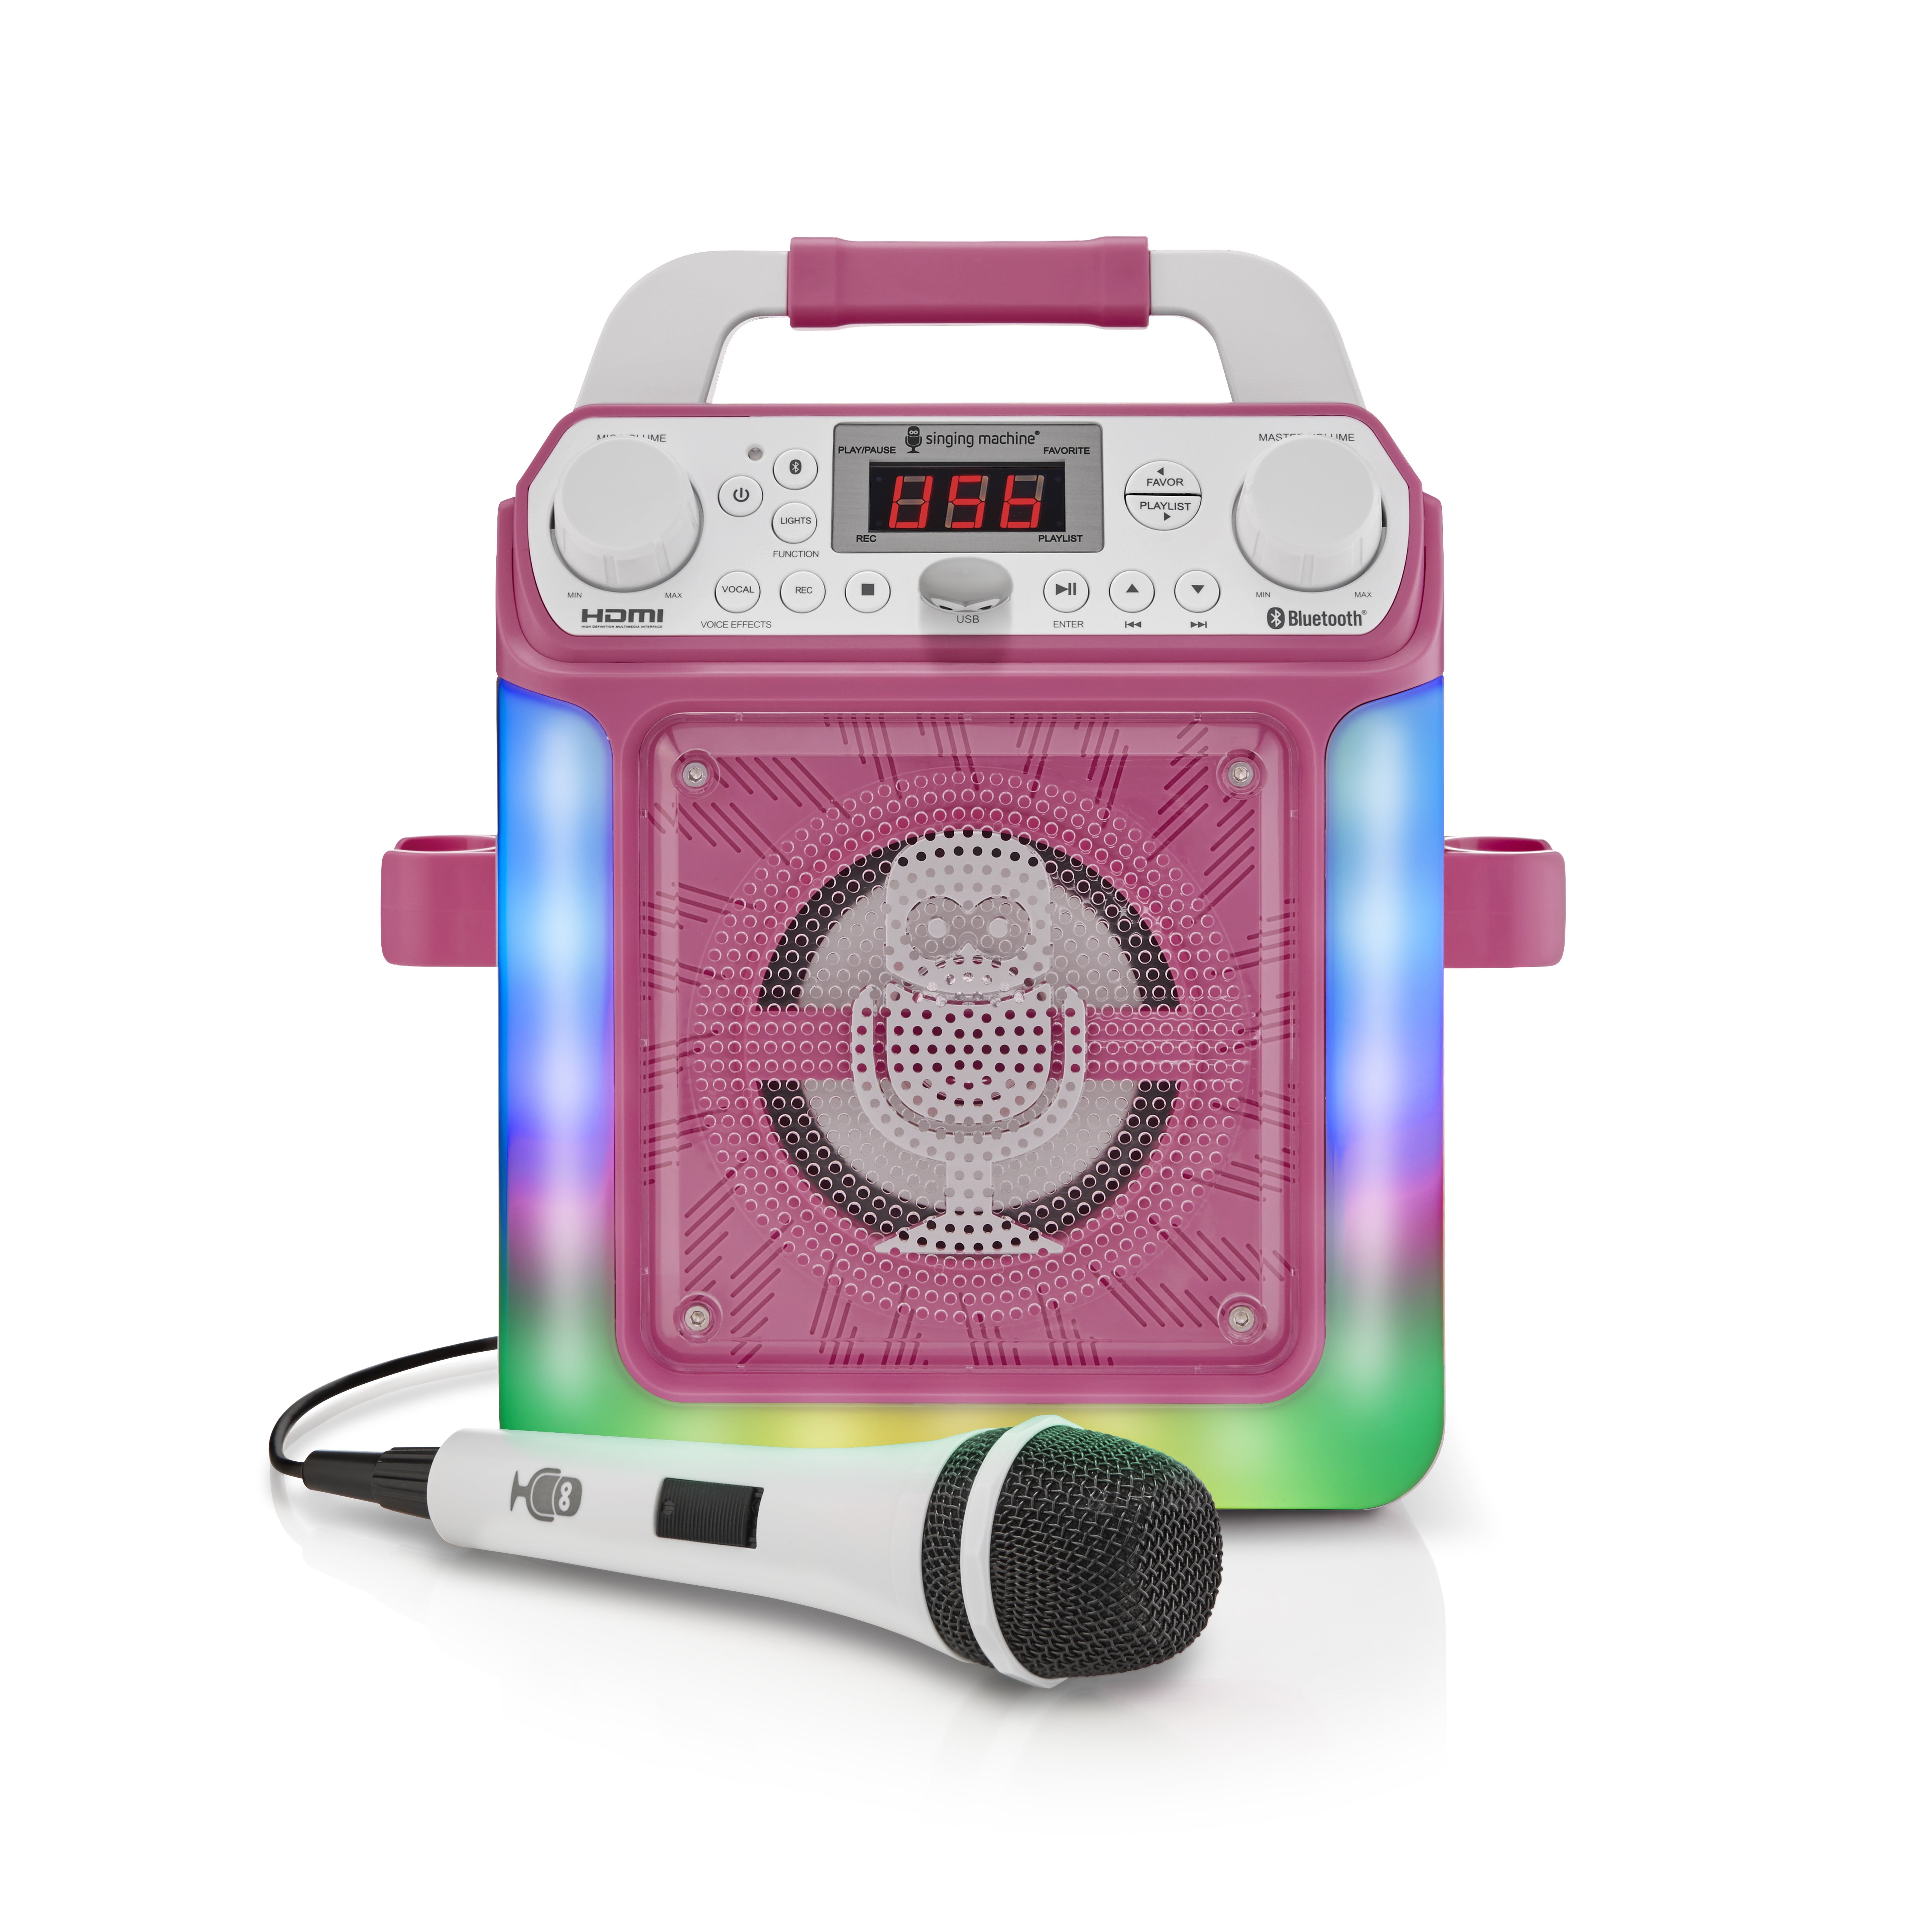 The Singing Machine Glow, SML2200, Bluetooth CDG Karaoke Machine 